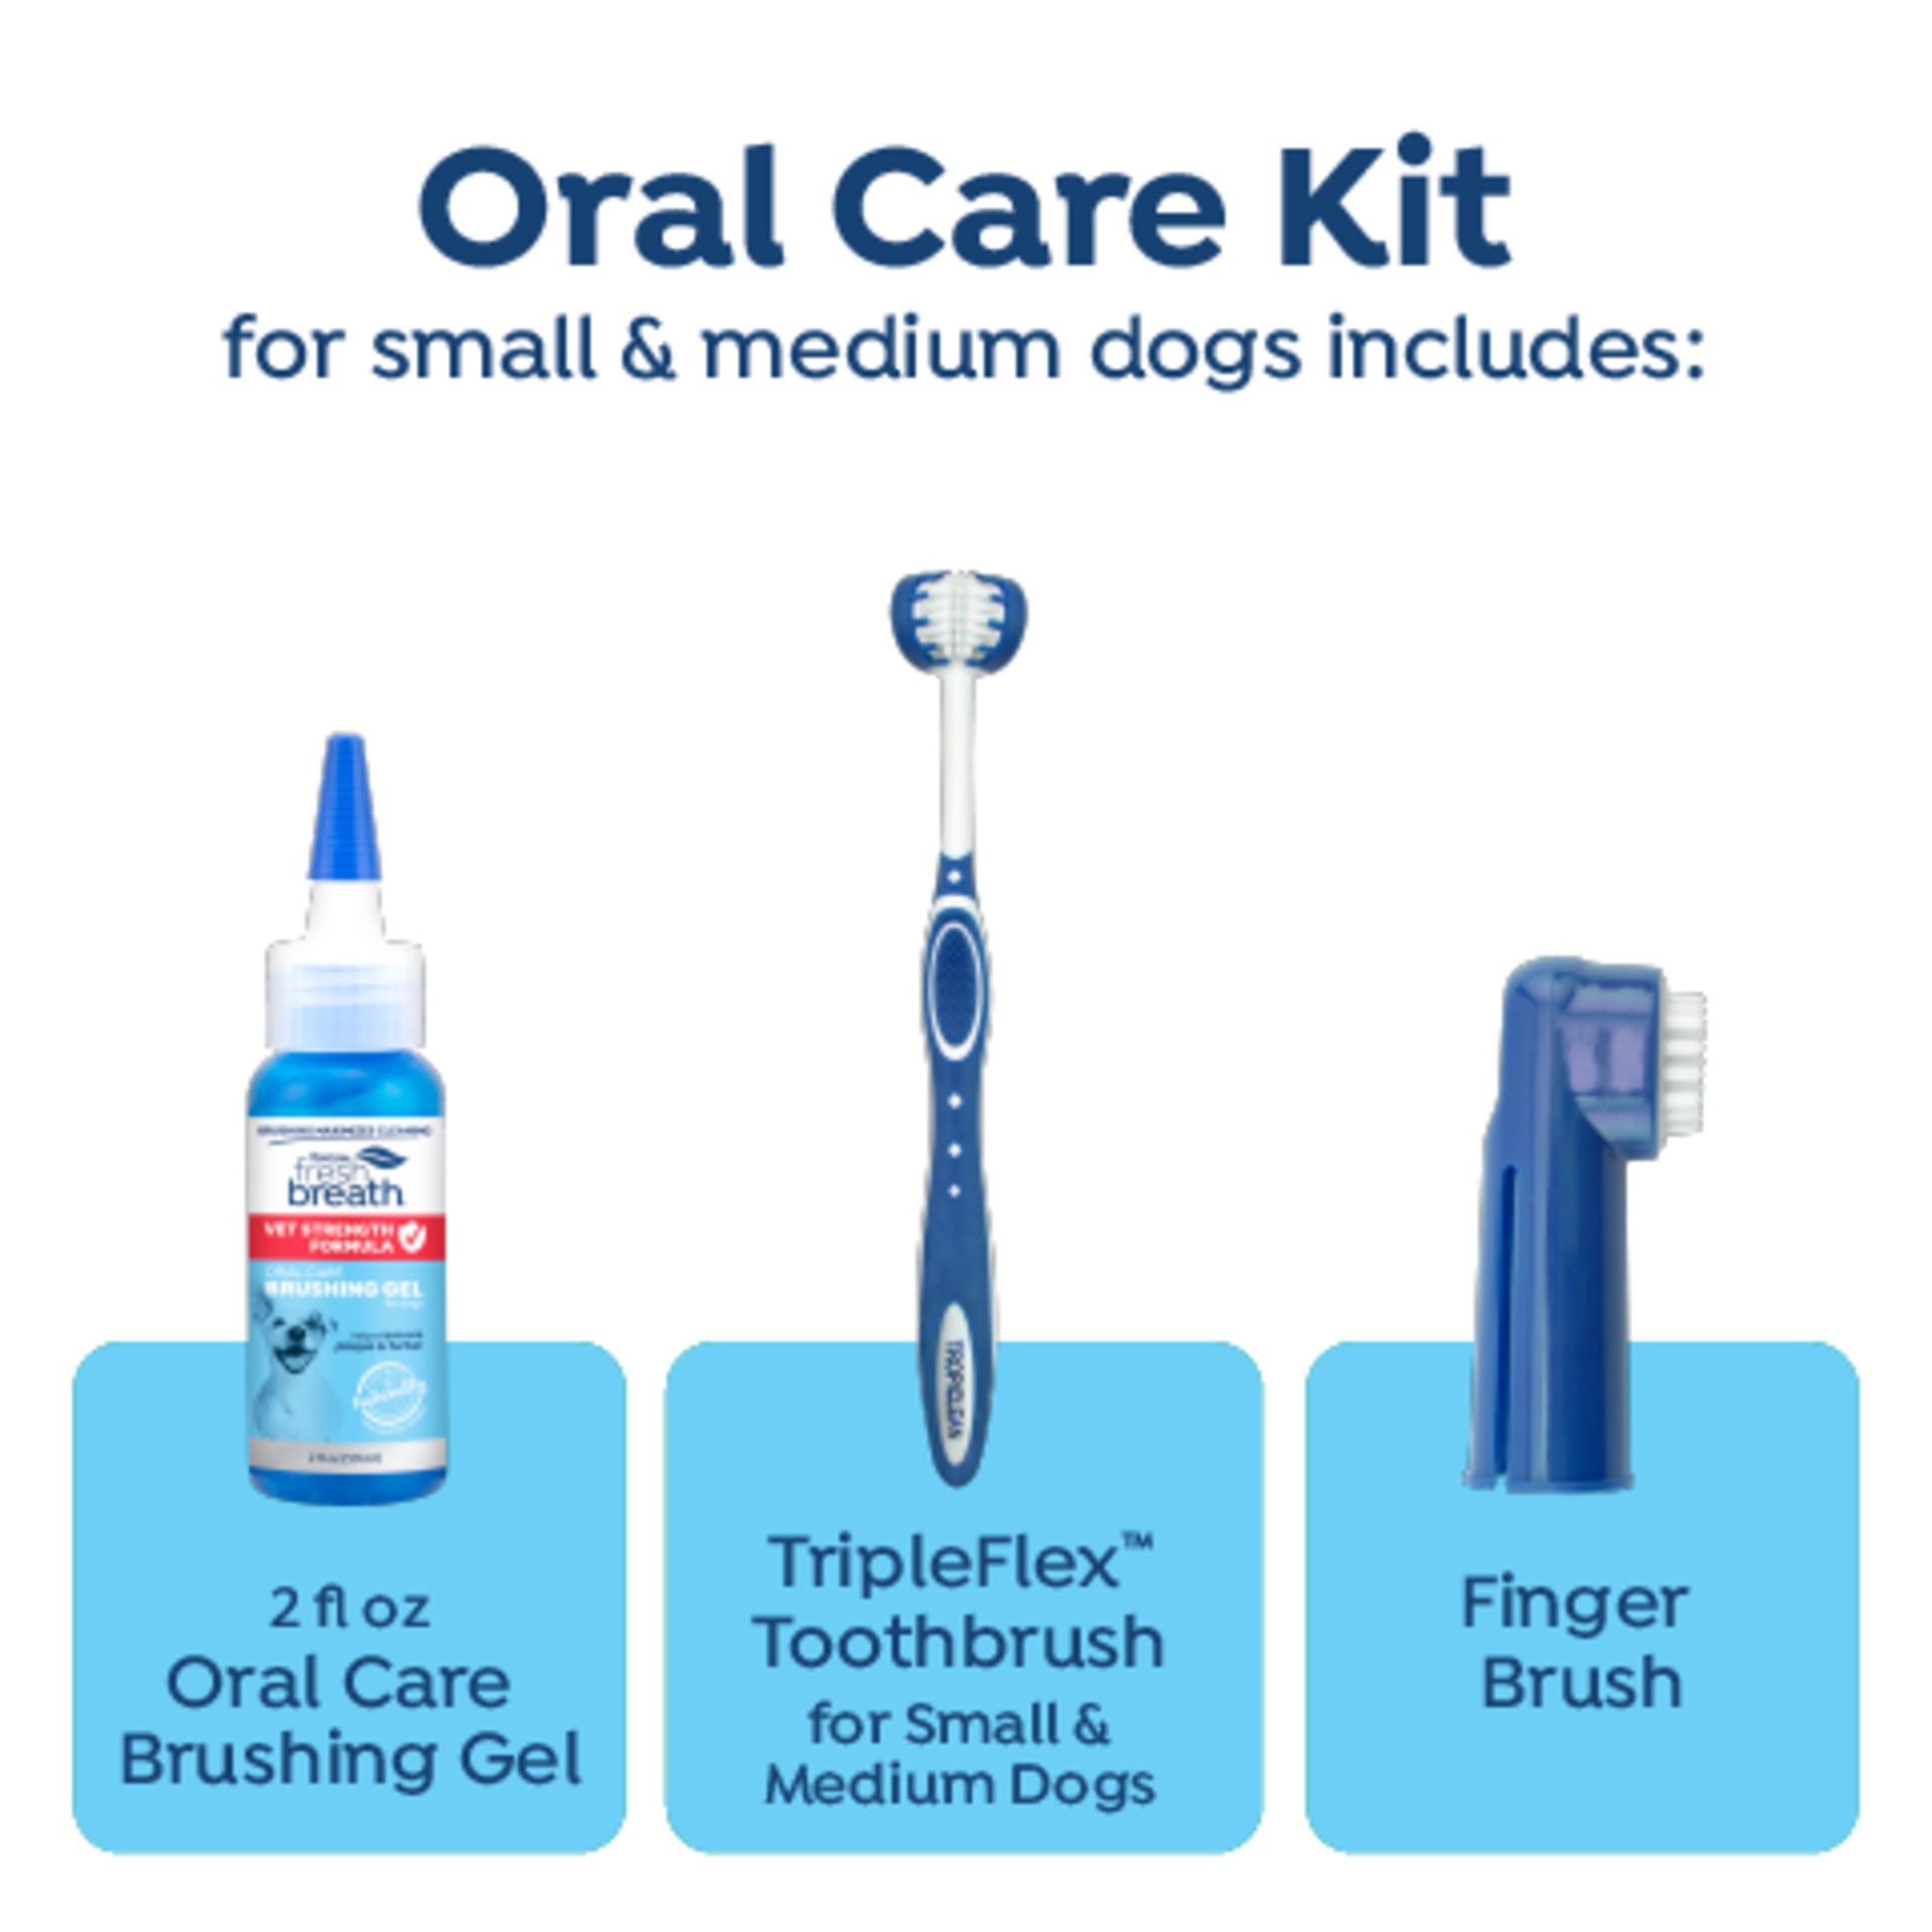 Vet Strength Oral Care Kit for Small & Medium Dogs